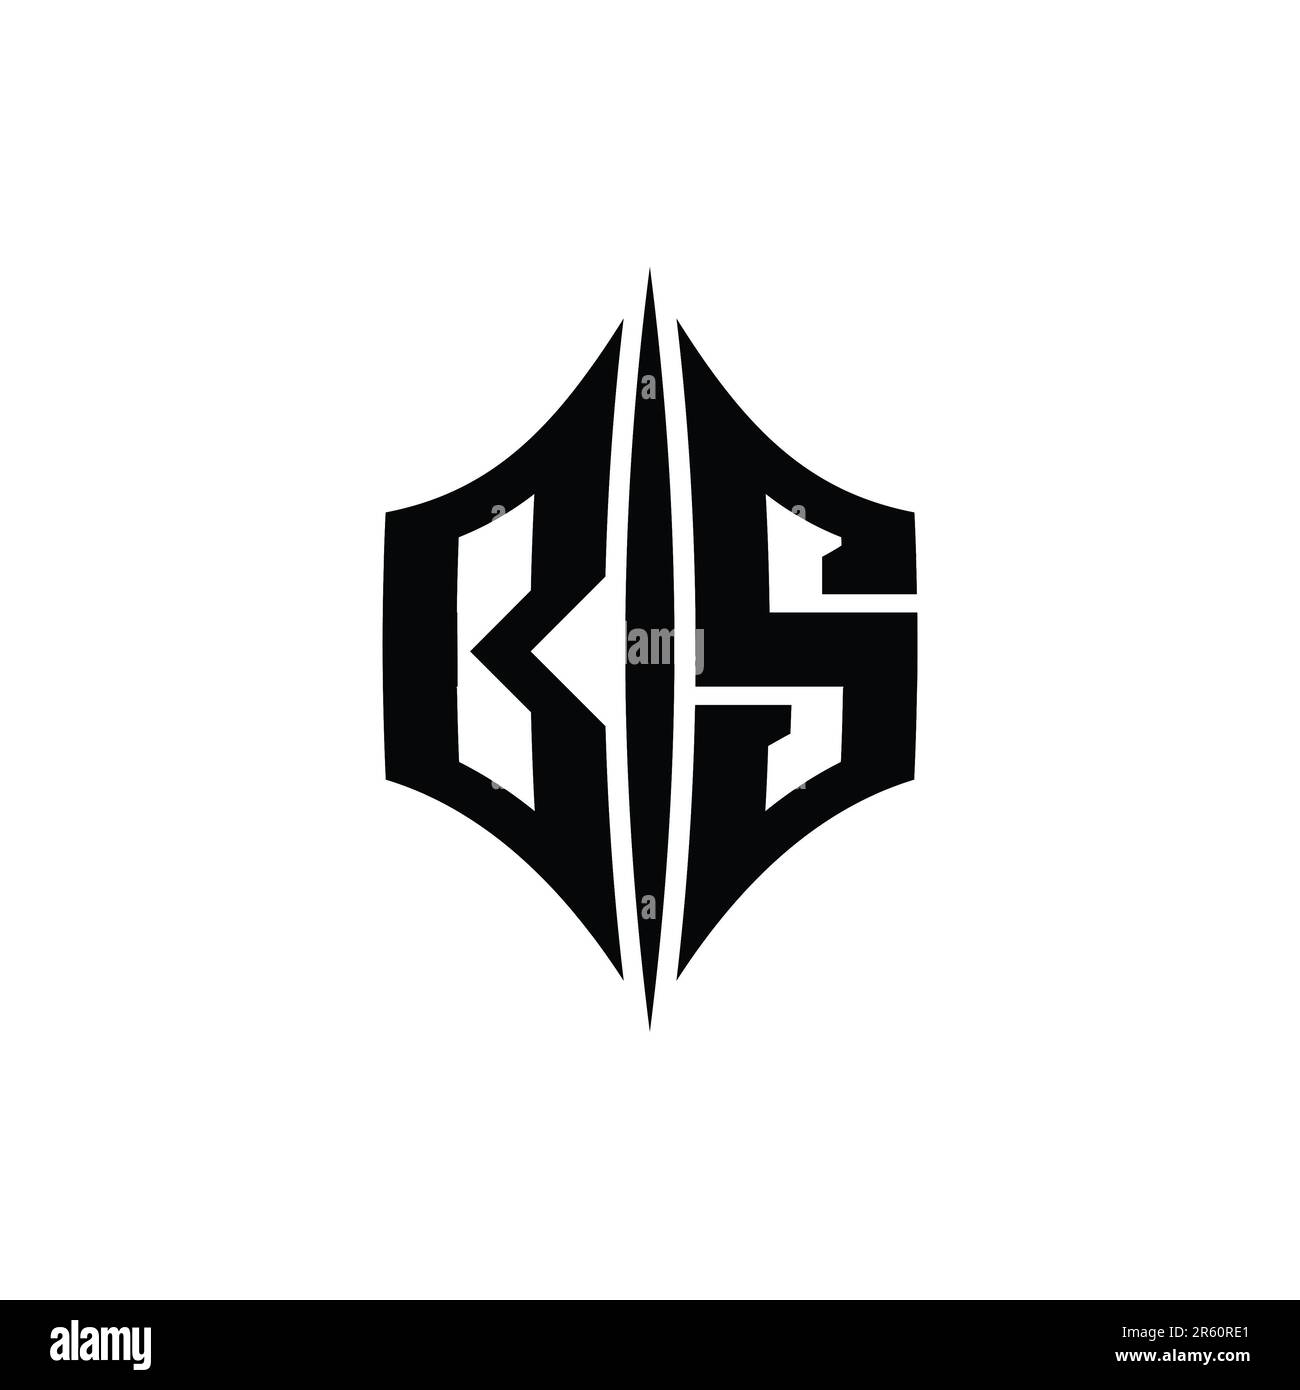 BS Letter Logo monogram hexagon diamond shape with piercing style design template Stock Photo